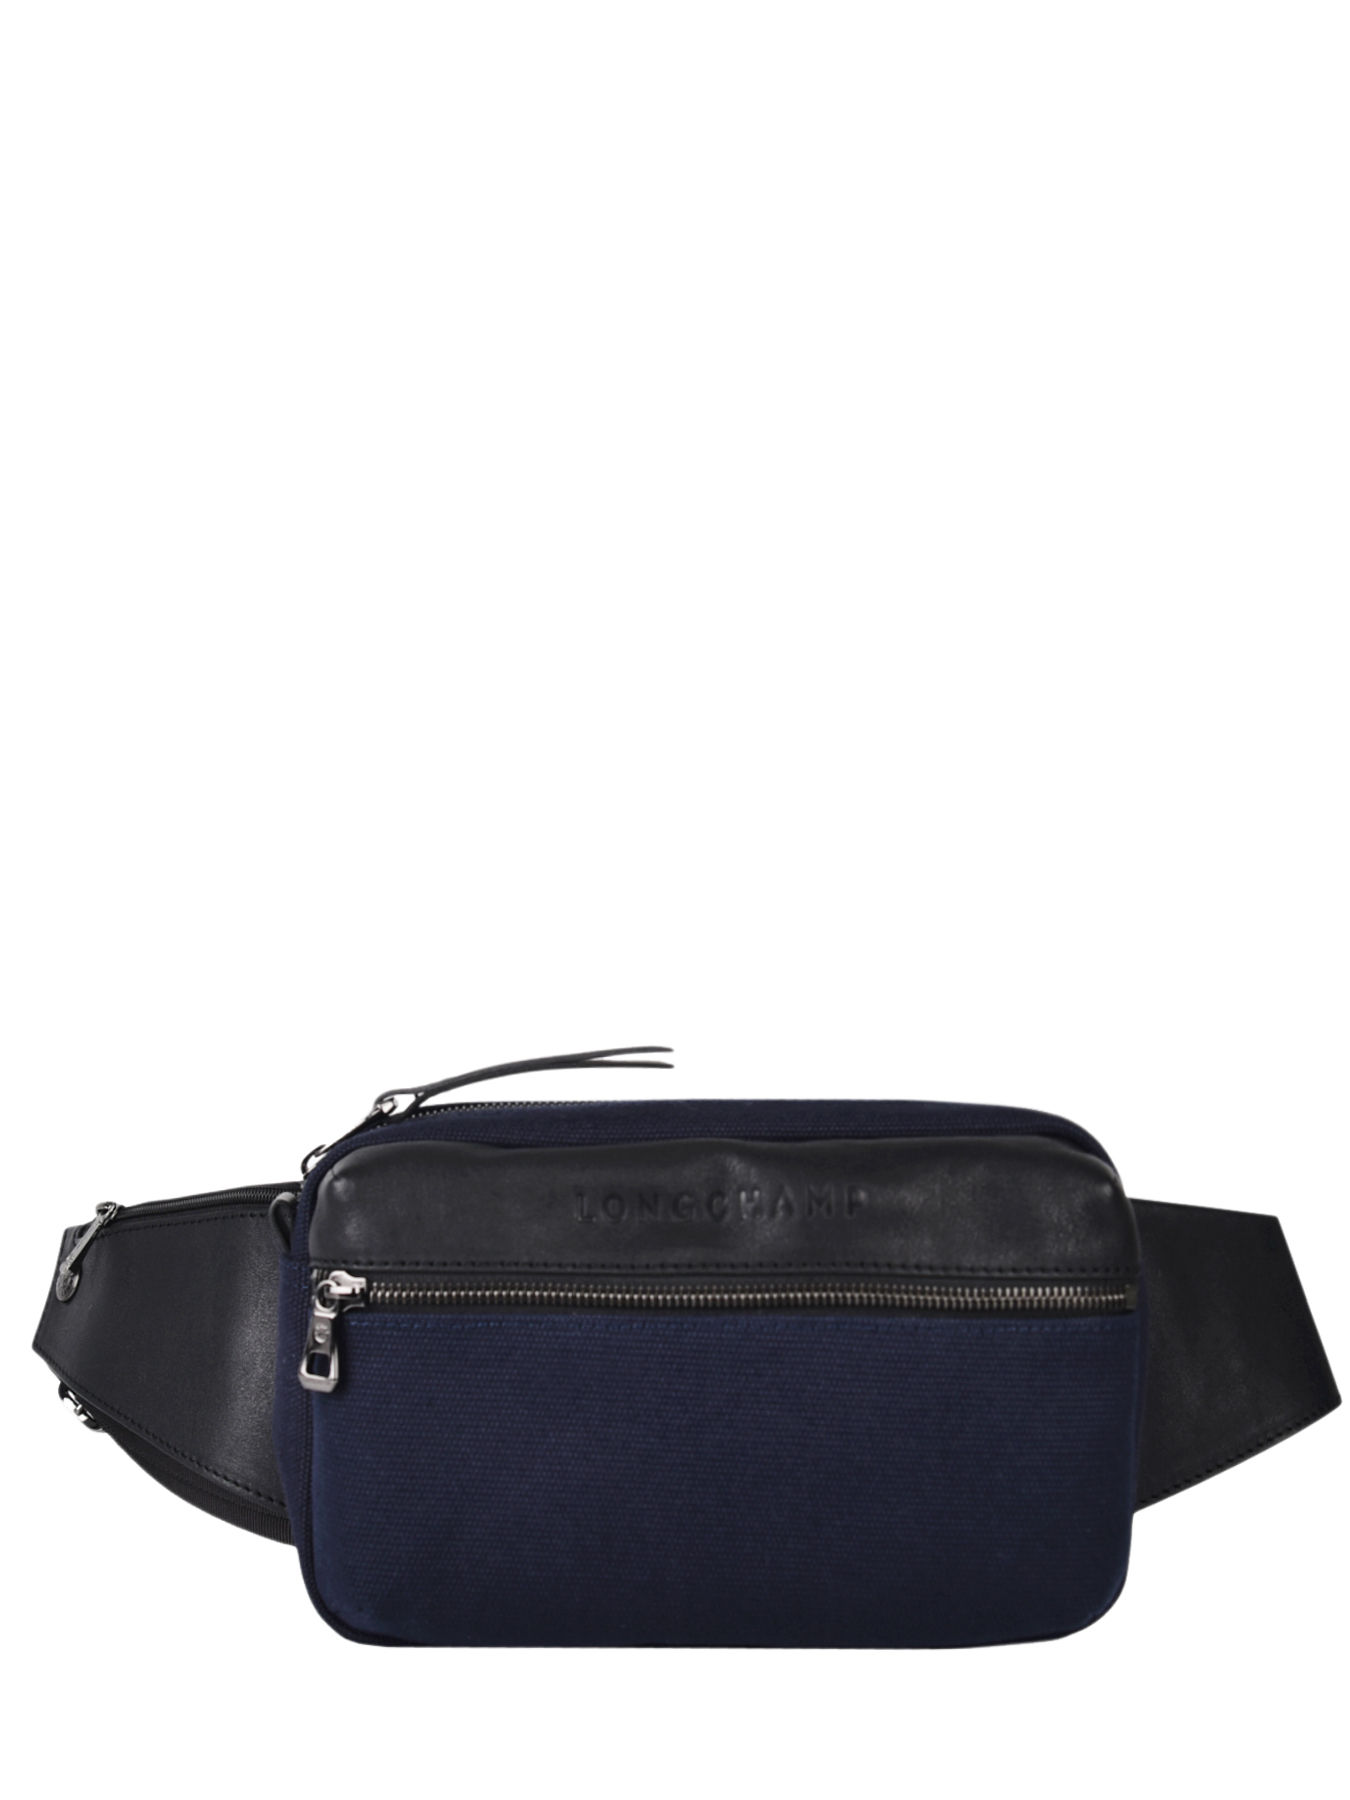 longchamp 3d belt bag